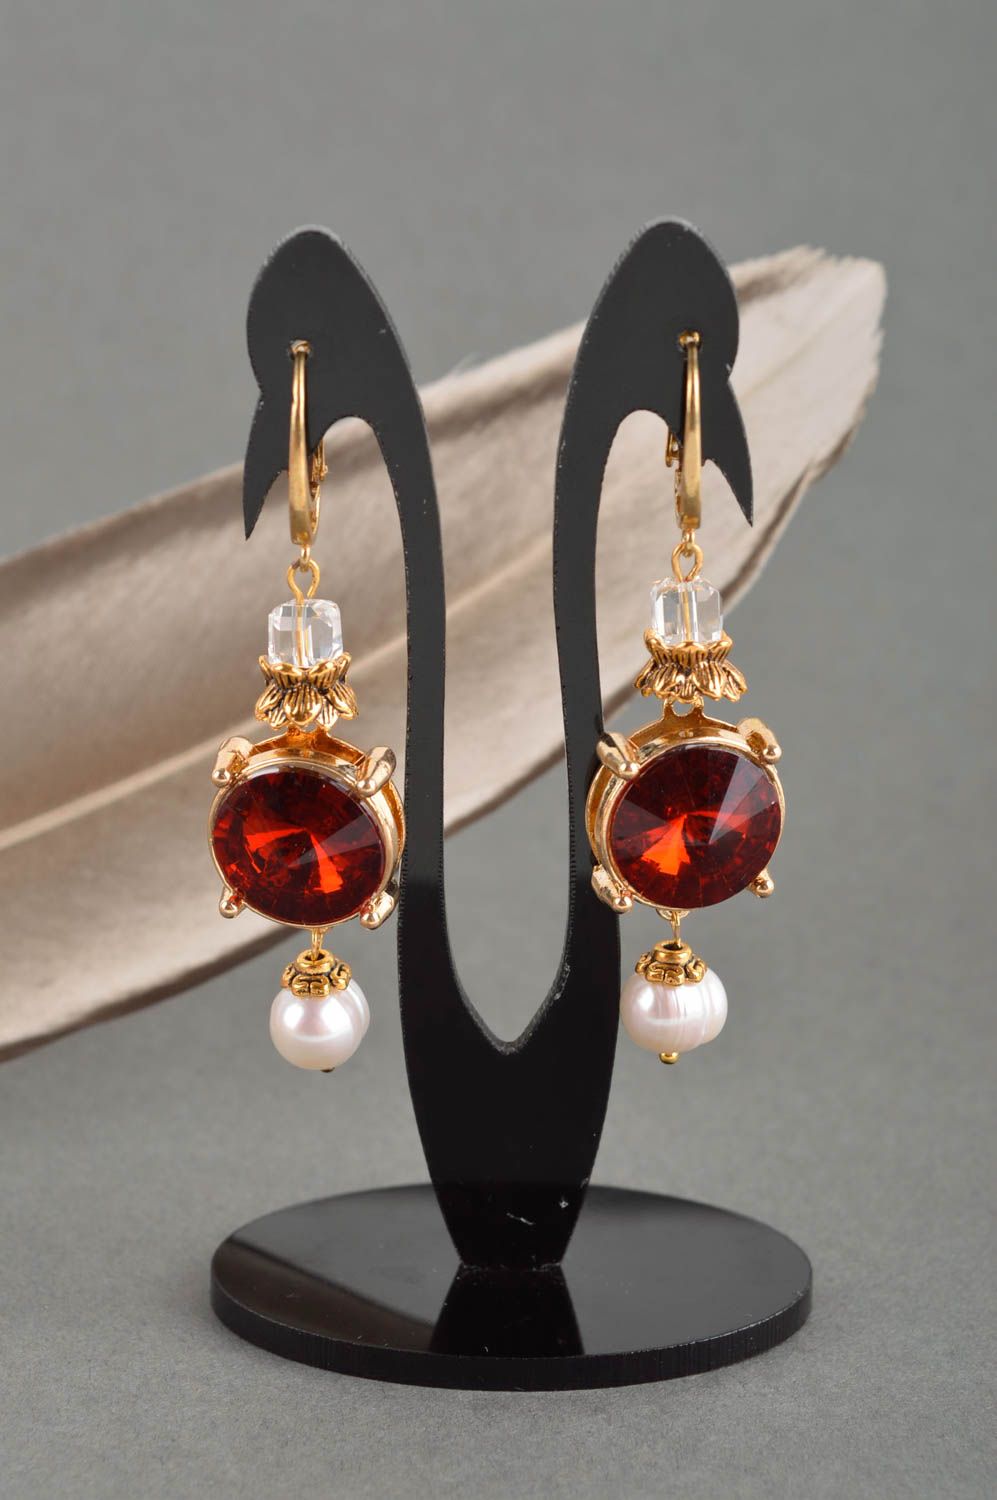 Handmade earrings designer accessories gemstone jewelry dangling earrings photo 1